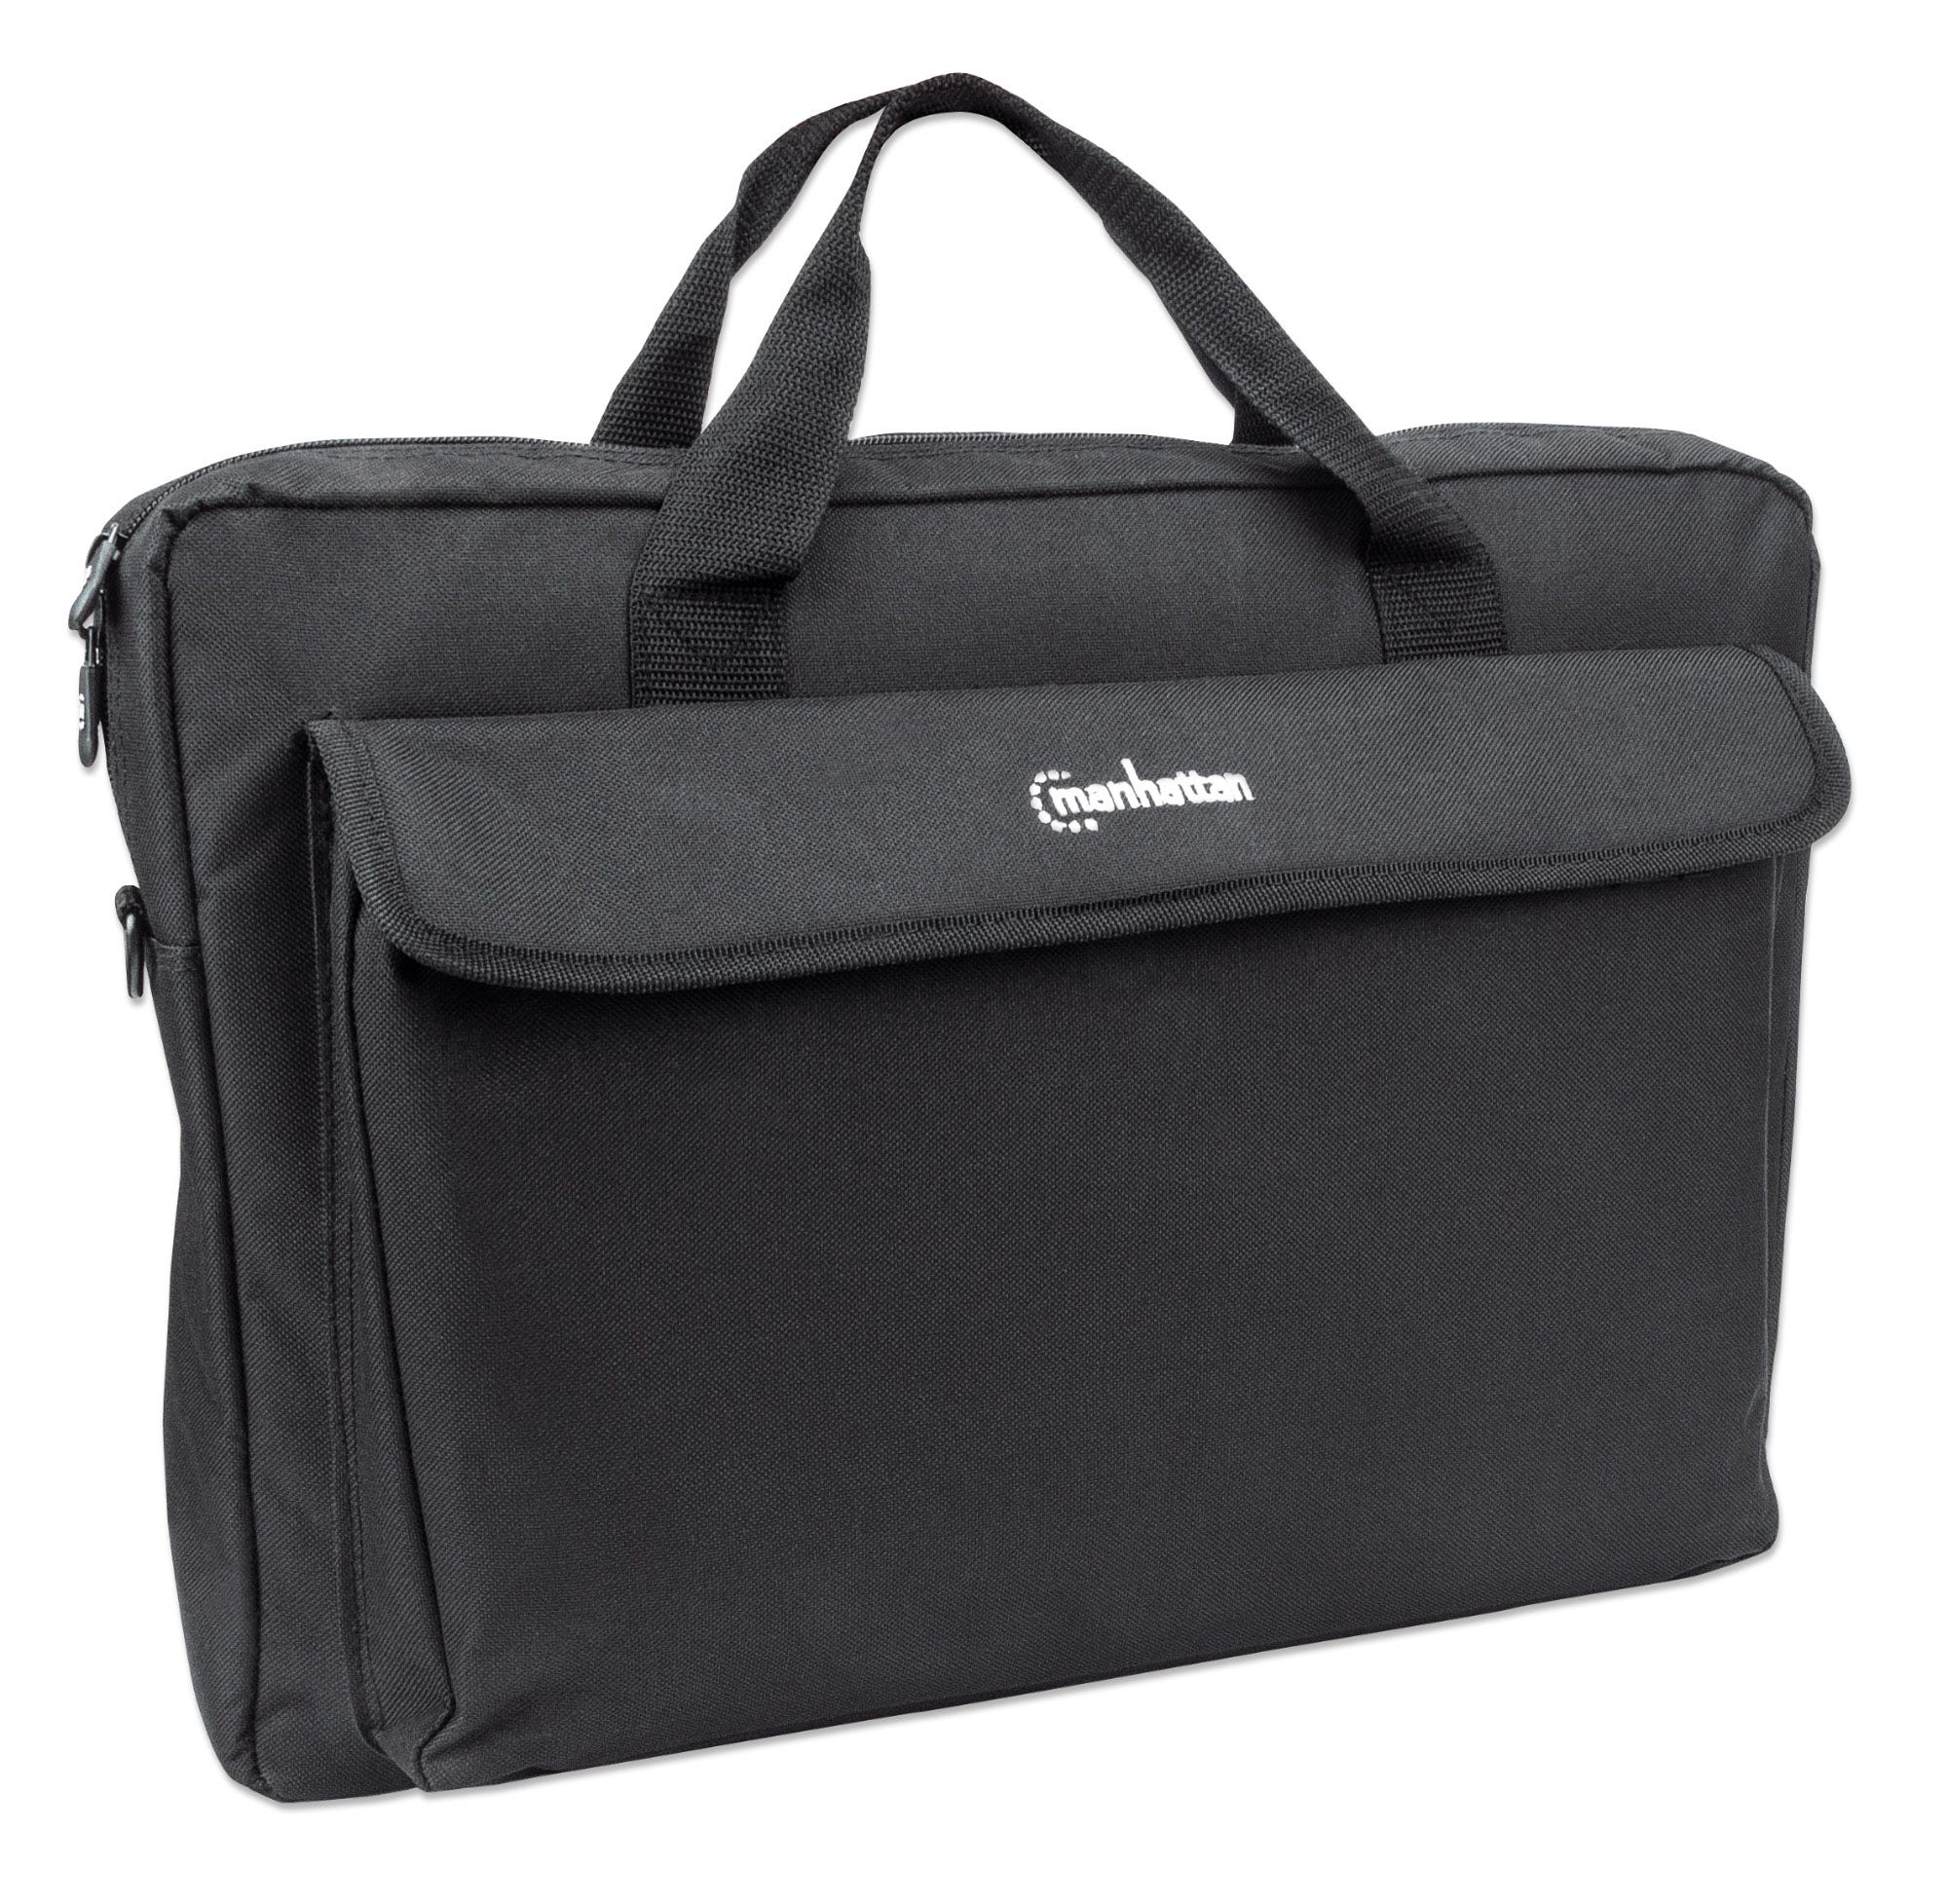 Manhattan London Laptop Bag 17.3", Top Loader, Accessories Pocket, Shoulder Strap (removable), Black, Three Year Warranty